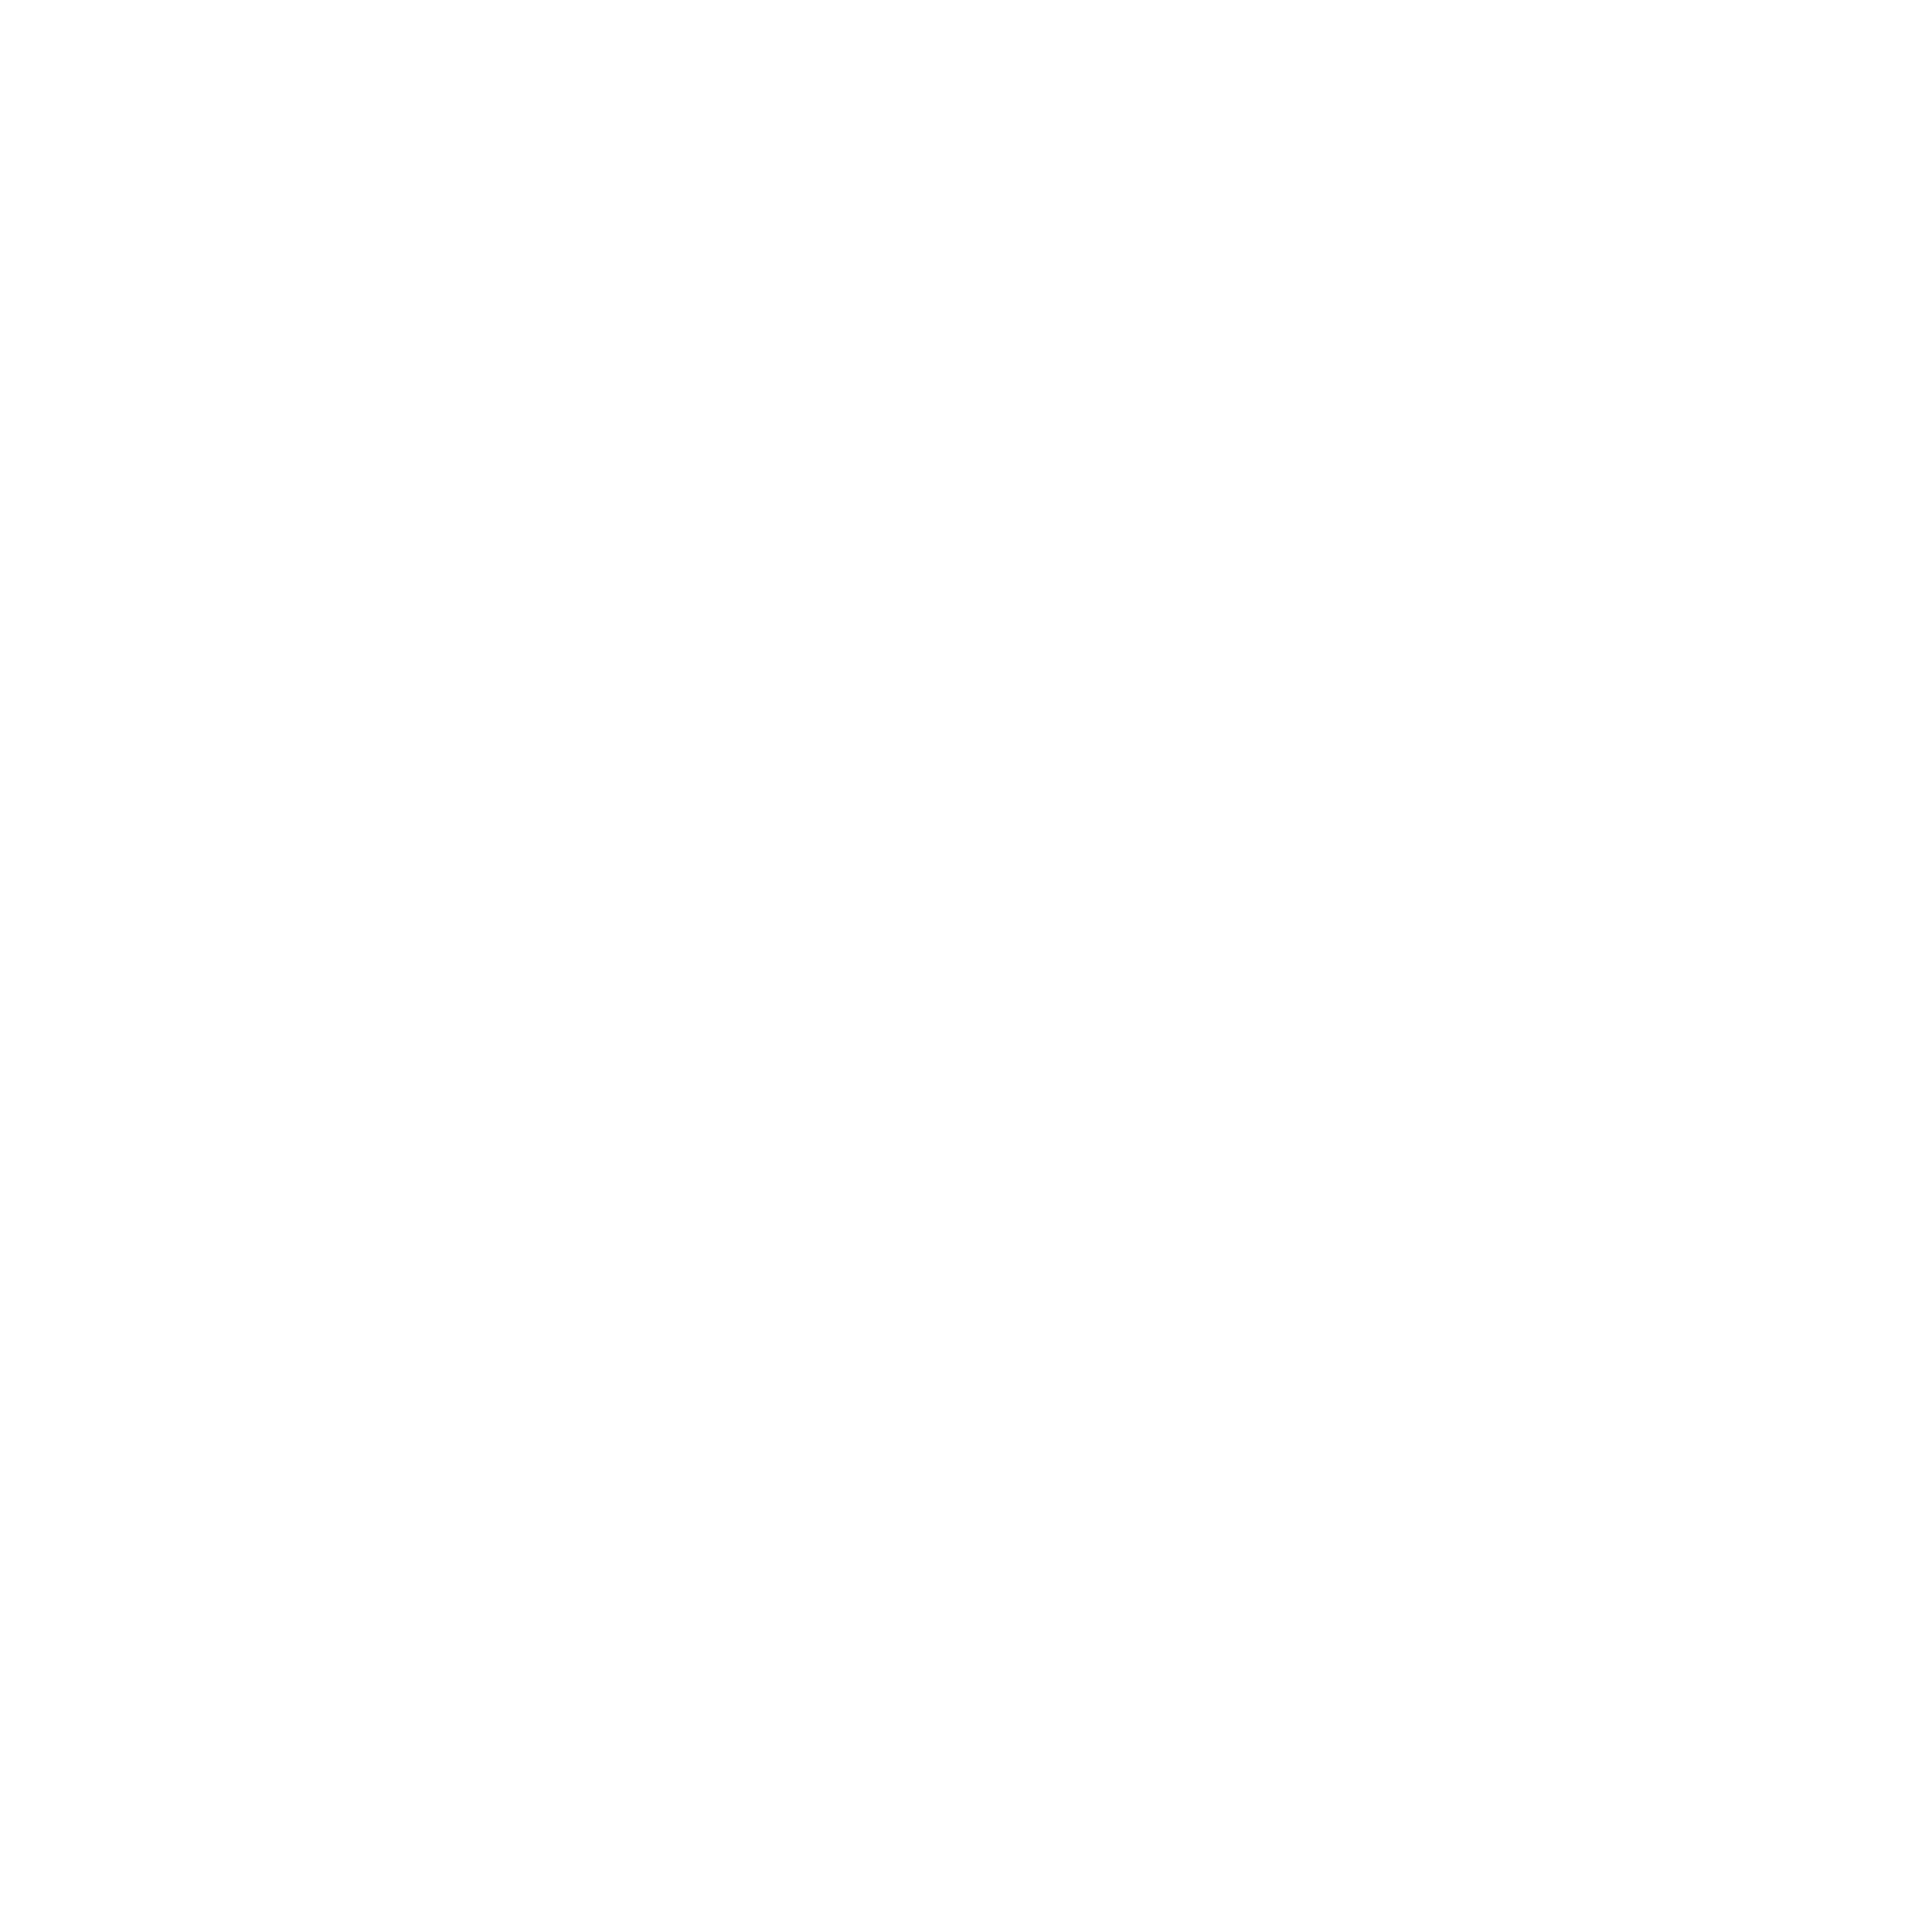 Innov8 Properties at Keller Williams Realty Downtown